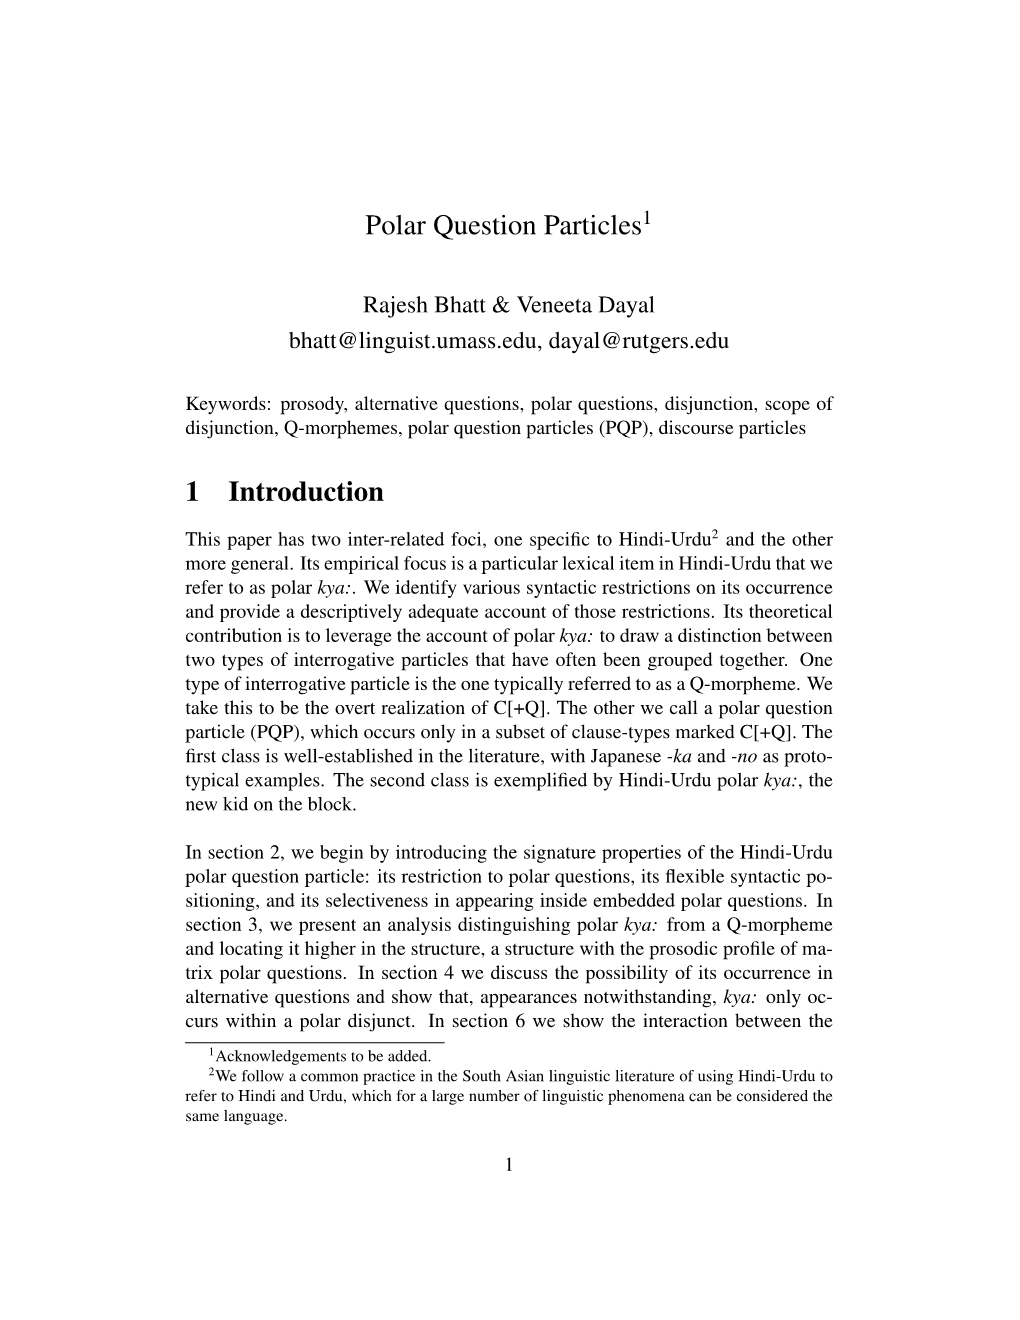 Polar Question Particles 1 Introduction